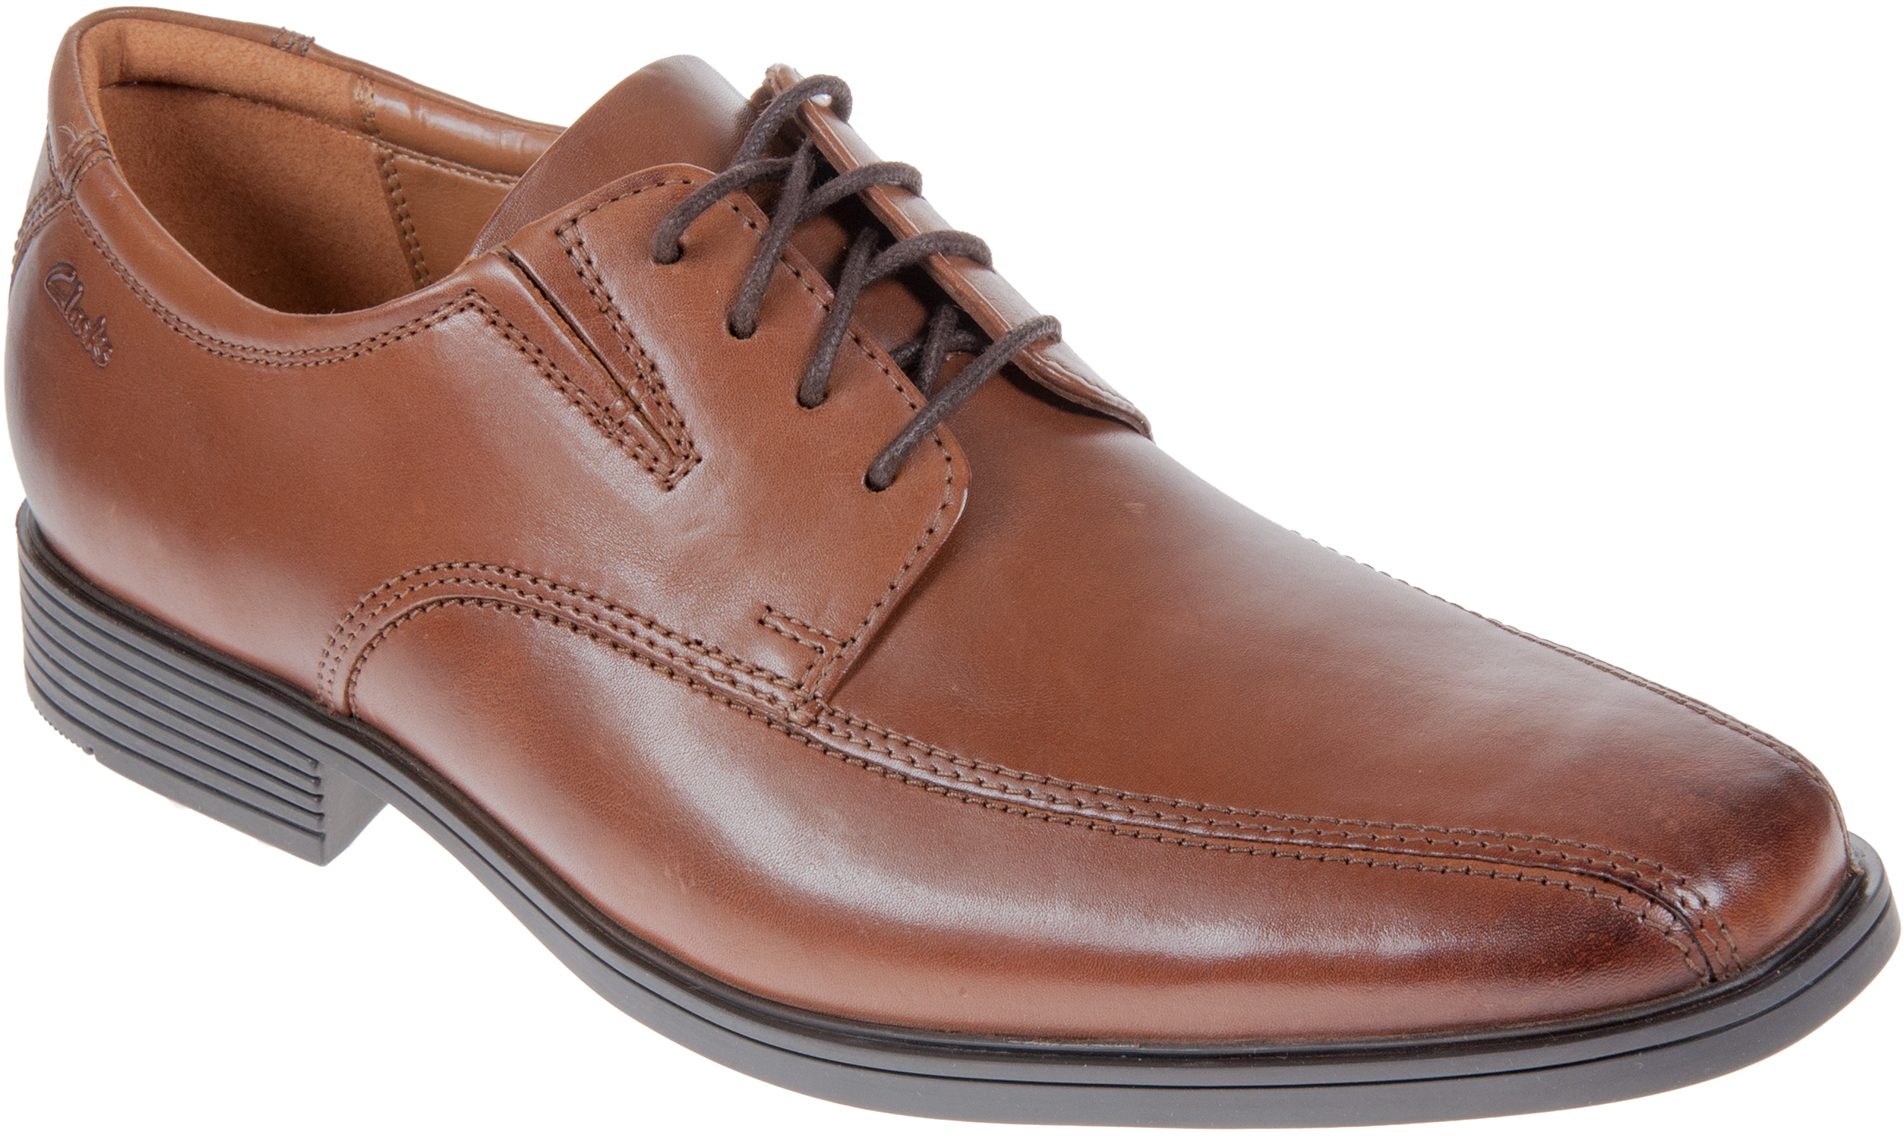 Clarks Tilden Walk Dark Tan Leather 26130095 - Formal Shoes - Humphries ...